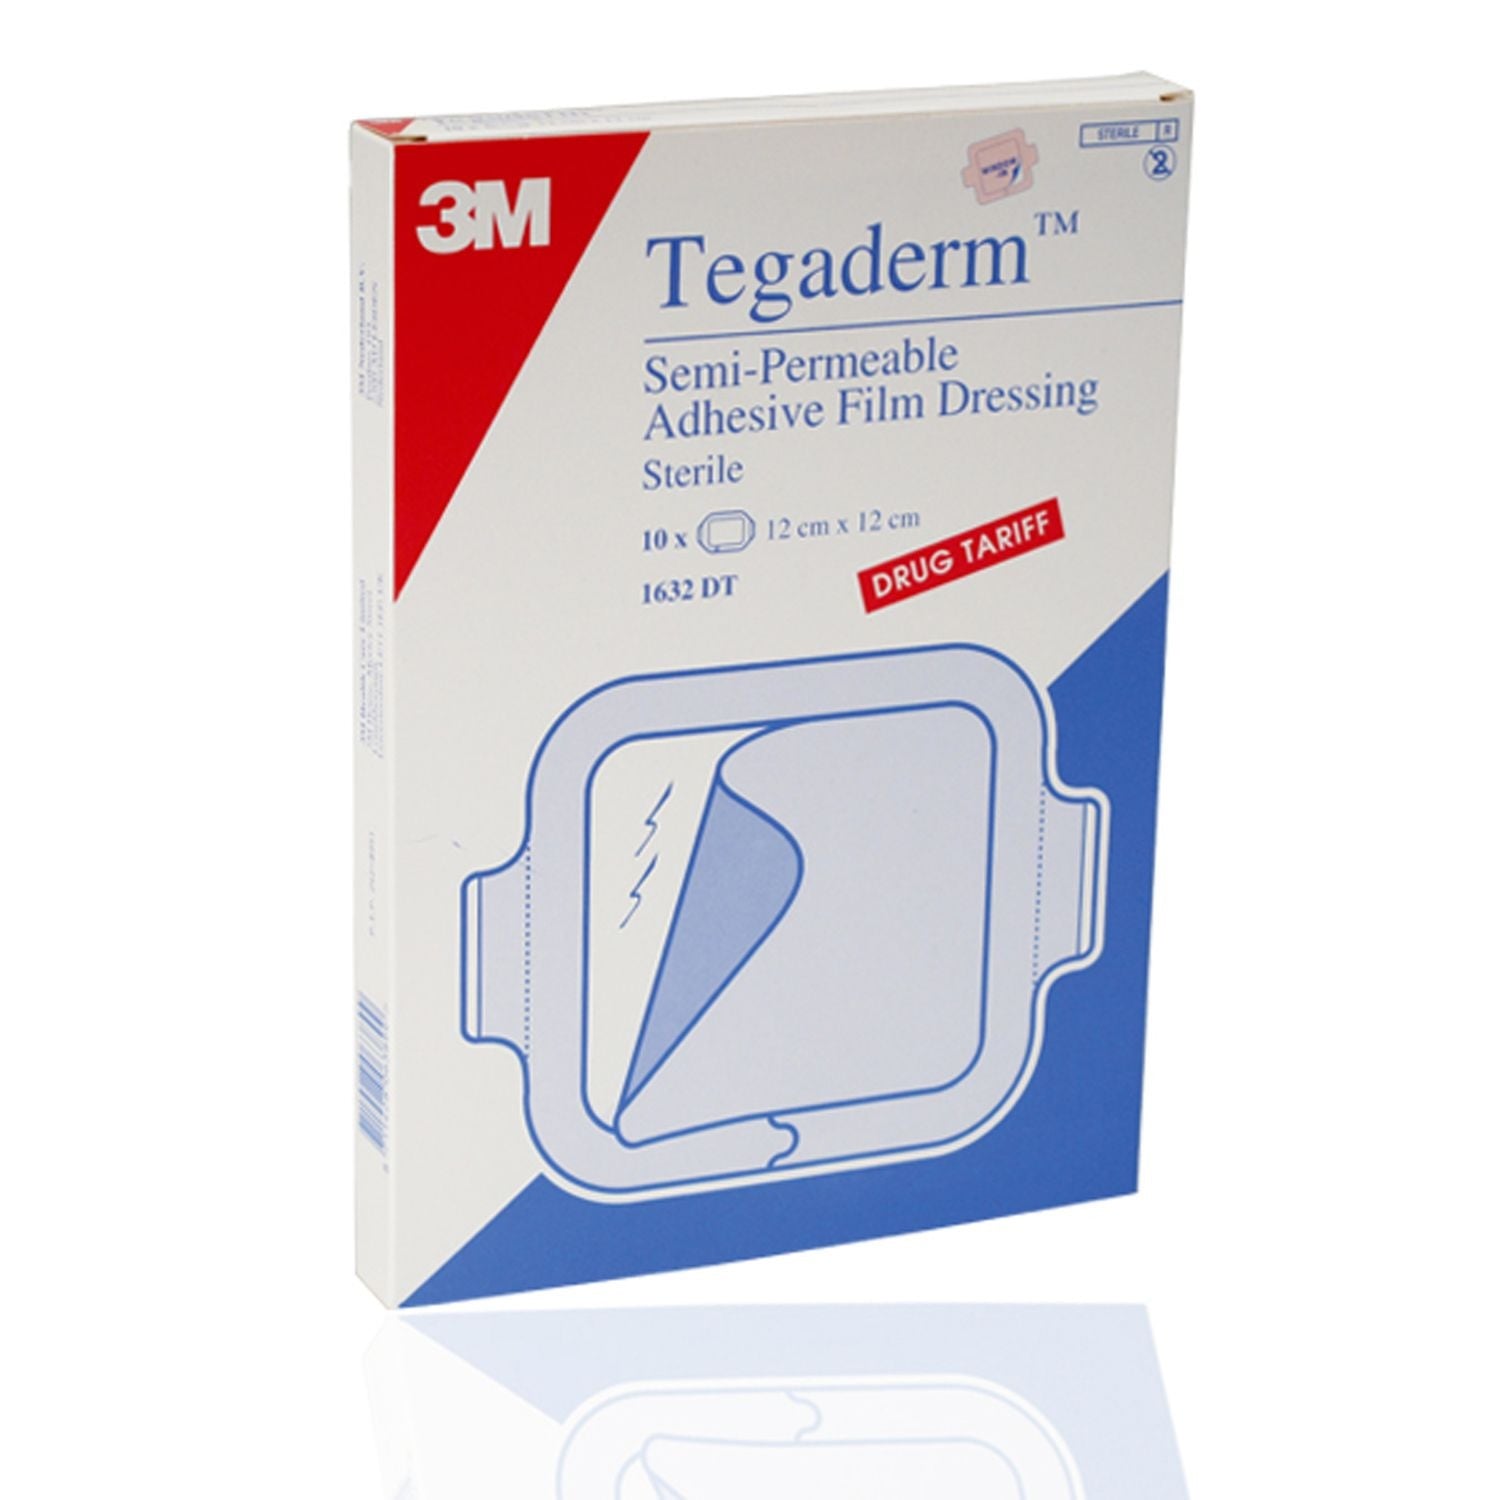 Tegaderm Film Dressing | Semi Permeable Adhesive | 15 x 20cm | Pack of 10